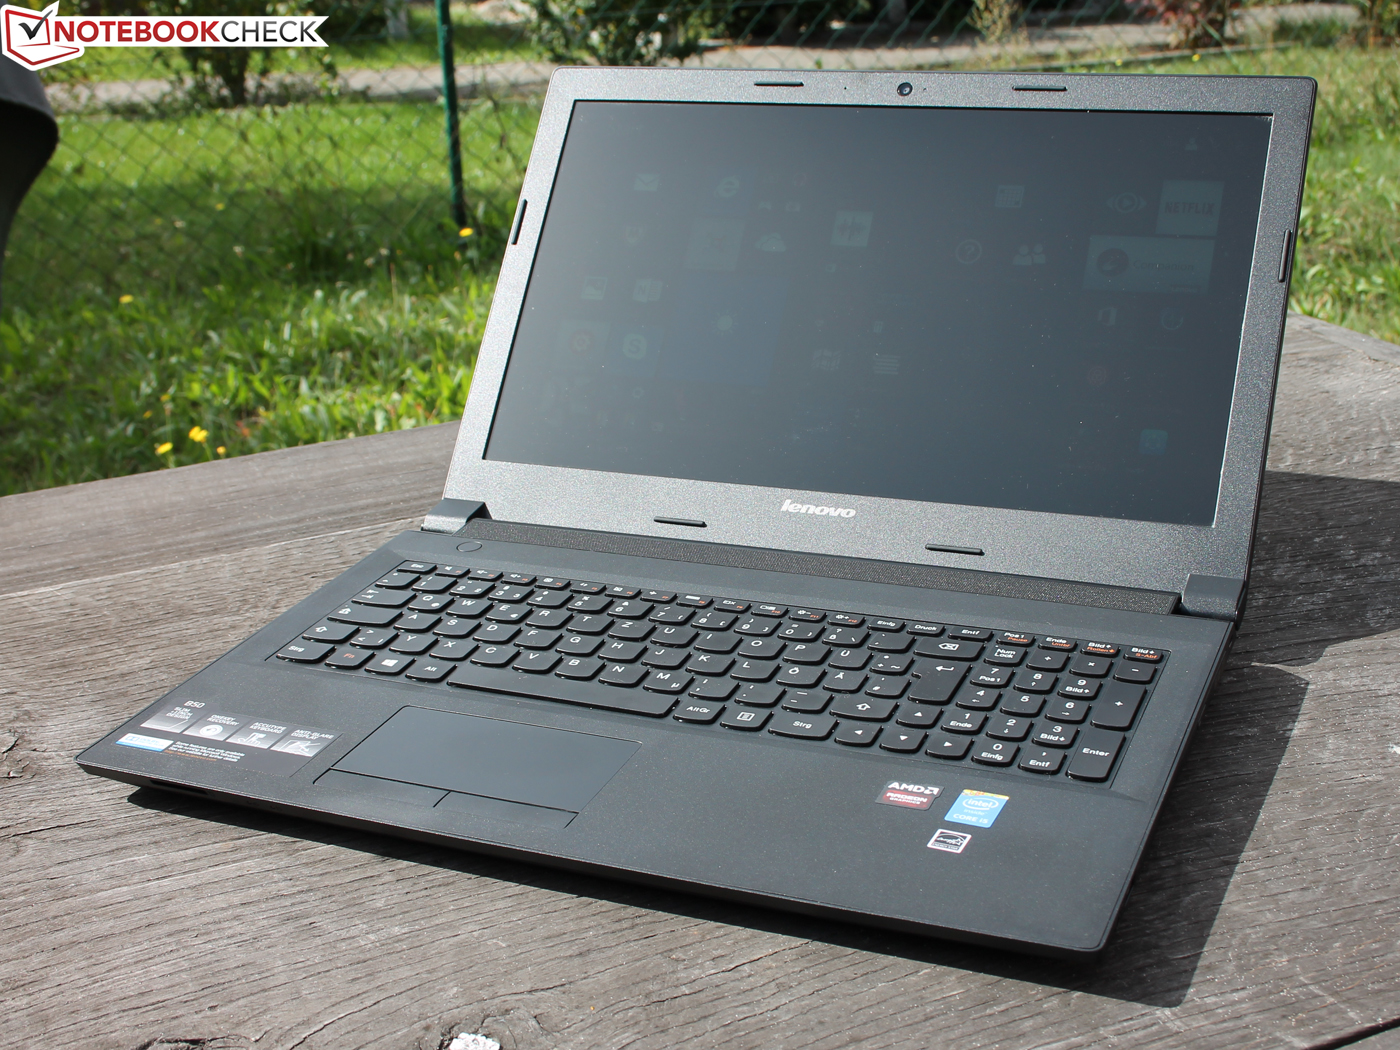 Lenovo B50-80 Notebook Review - NotebookCheck.net Reviews